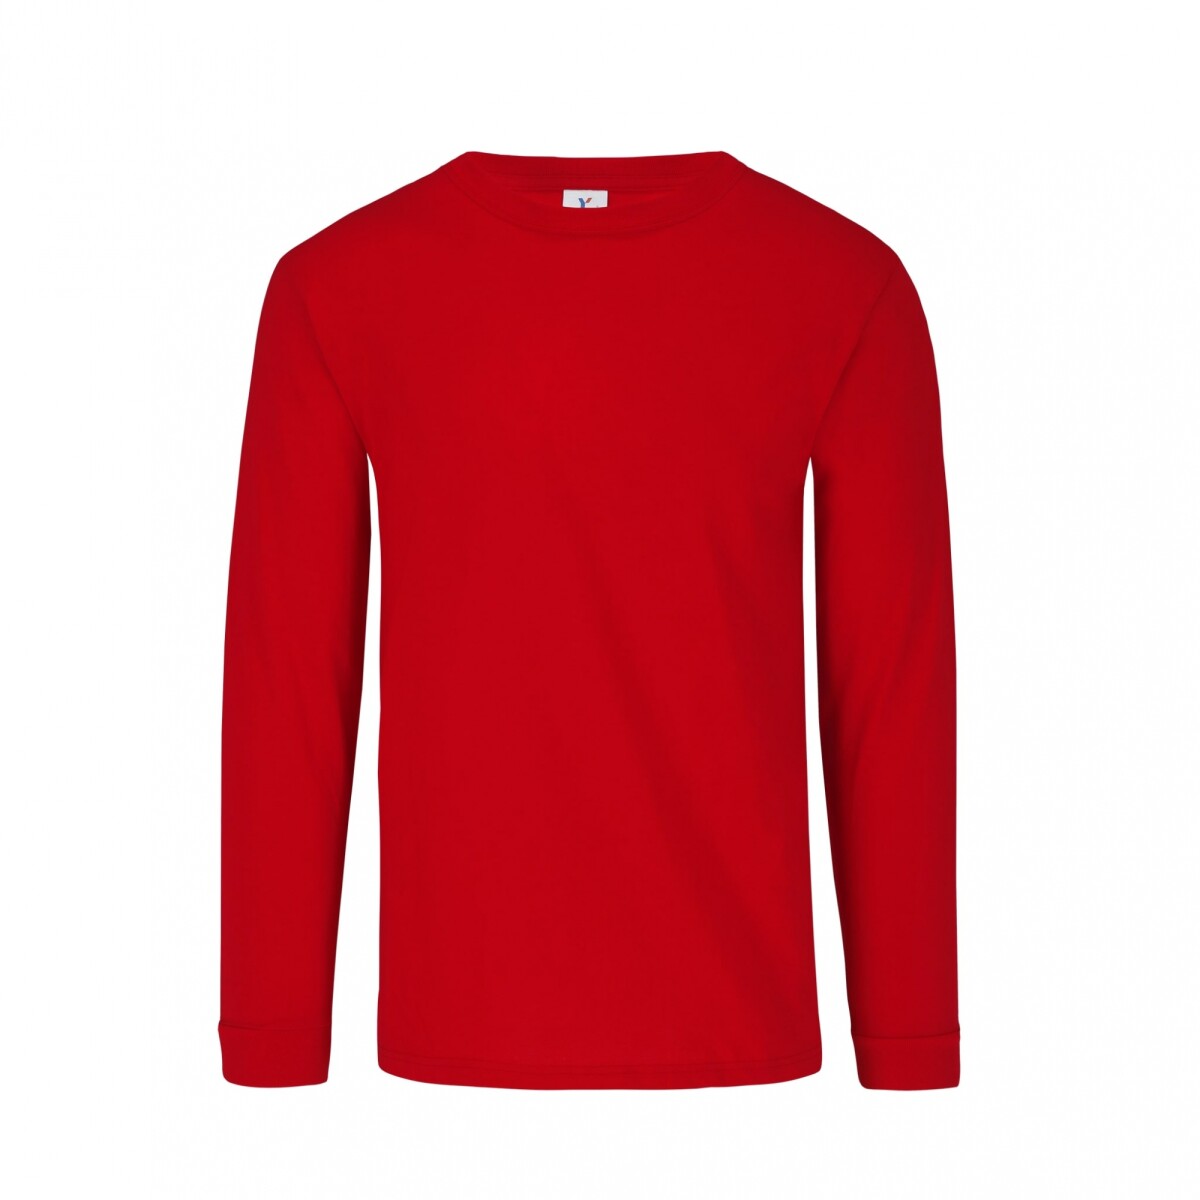 Camiseta a la base manga larga - Rojo 